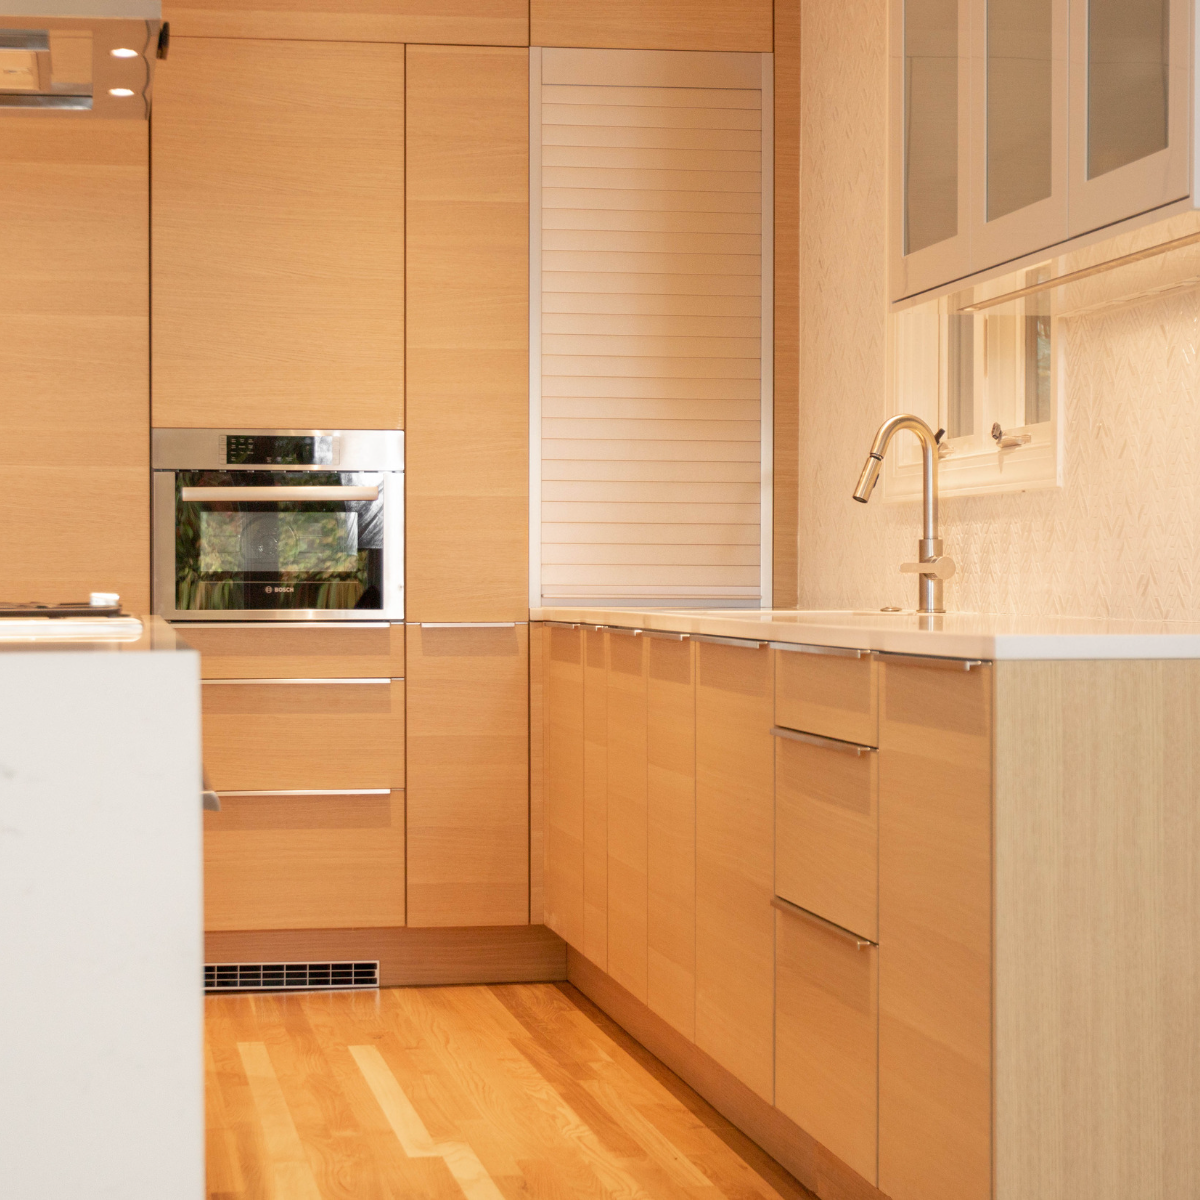 Kitchen design ideas wood cabinetry